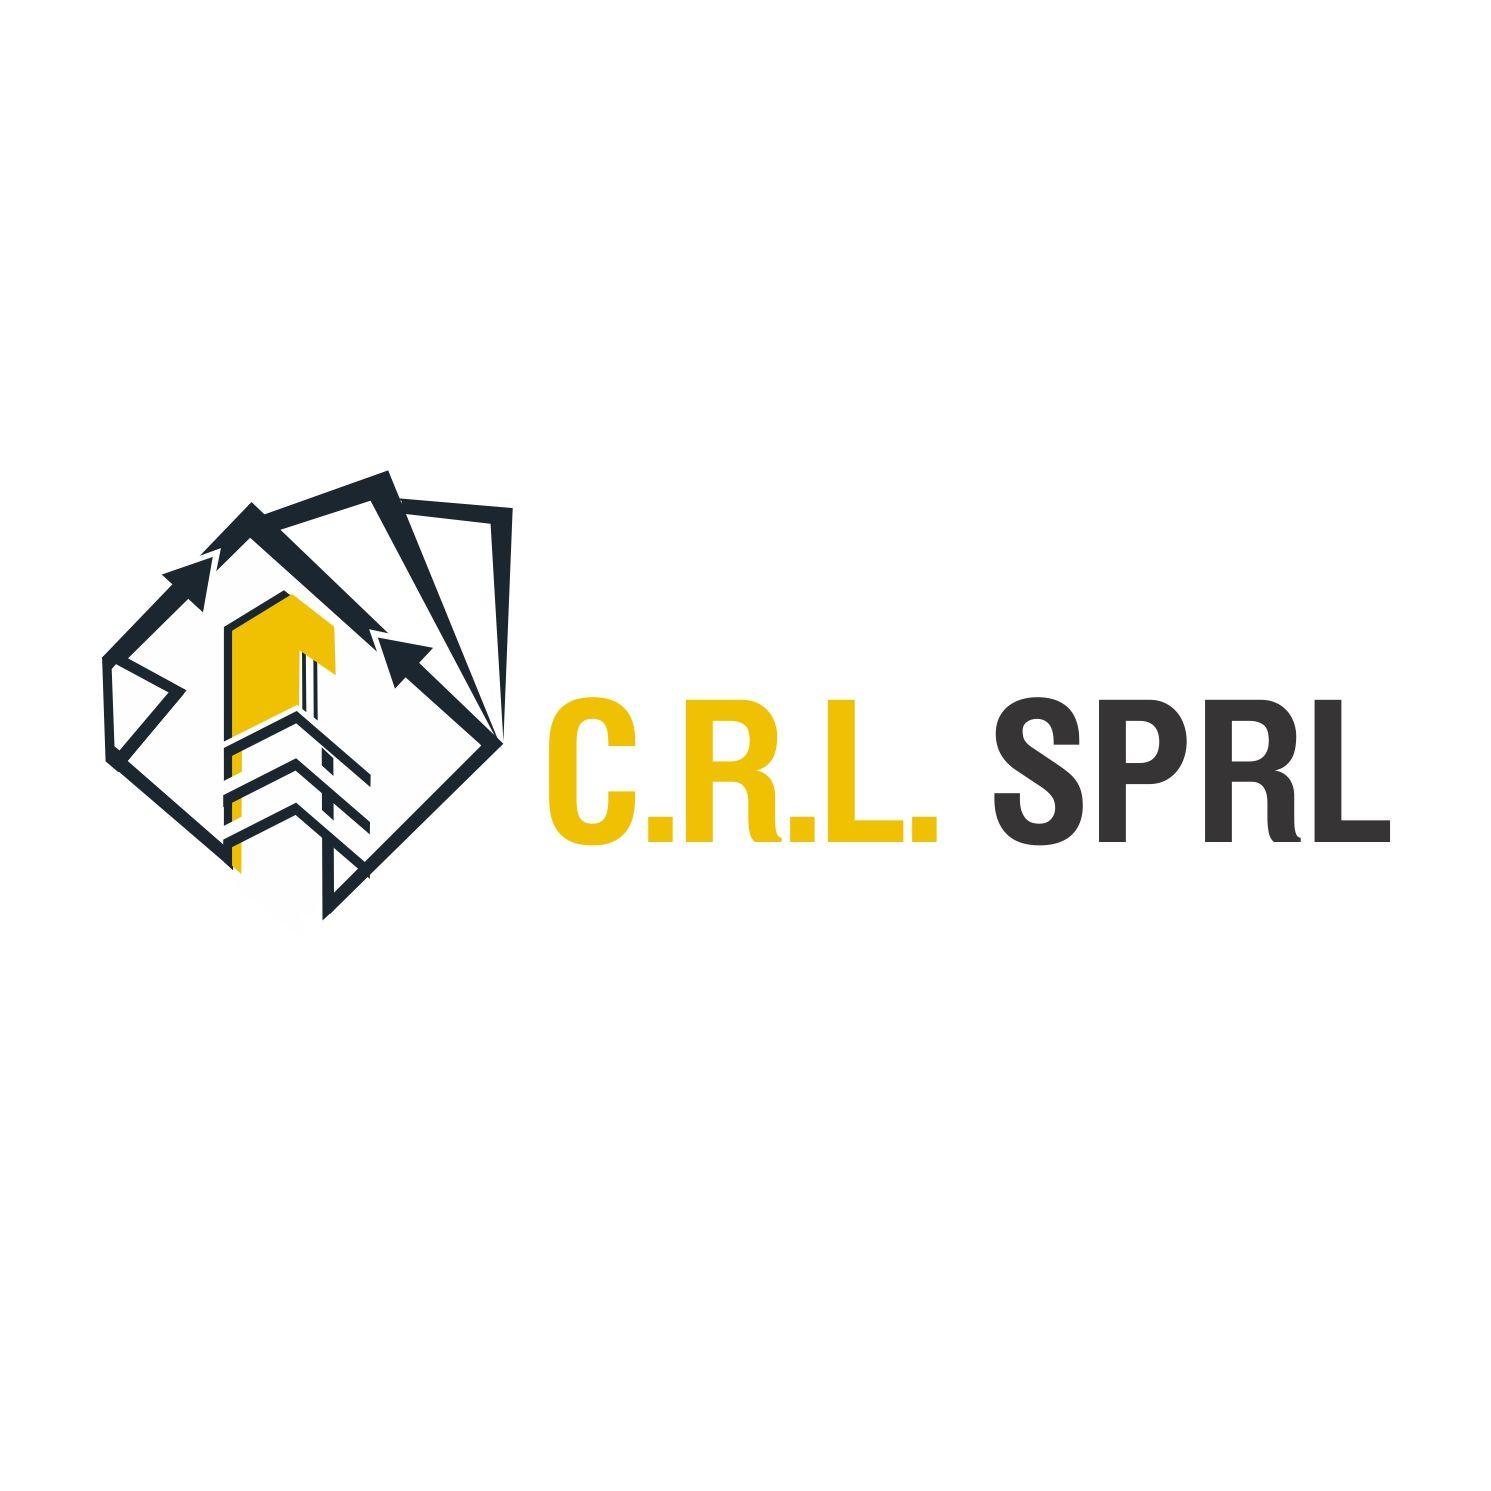 CRL Logo - Serious, Modern, Real Estate Logo Design for C.R.L. SPRL